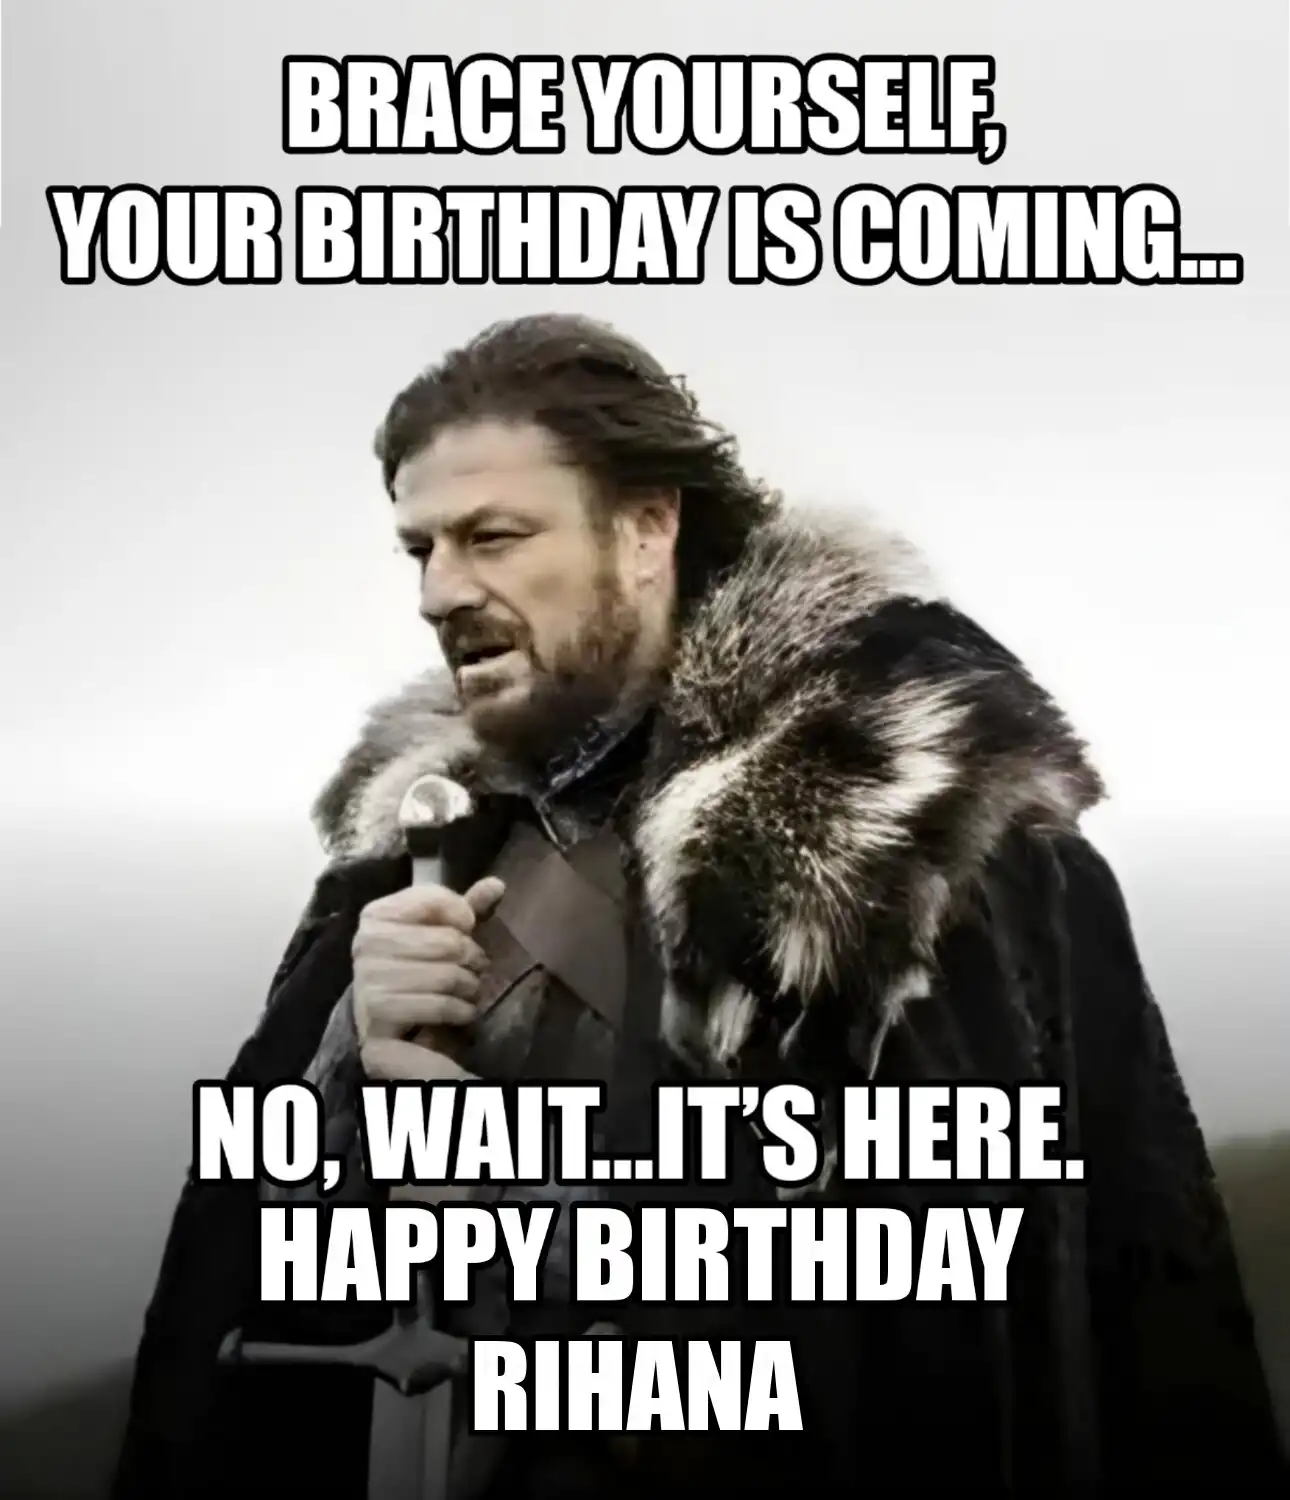 Happy Birthday Rihana Brace Yourself Your Birthday Is Coming Meme